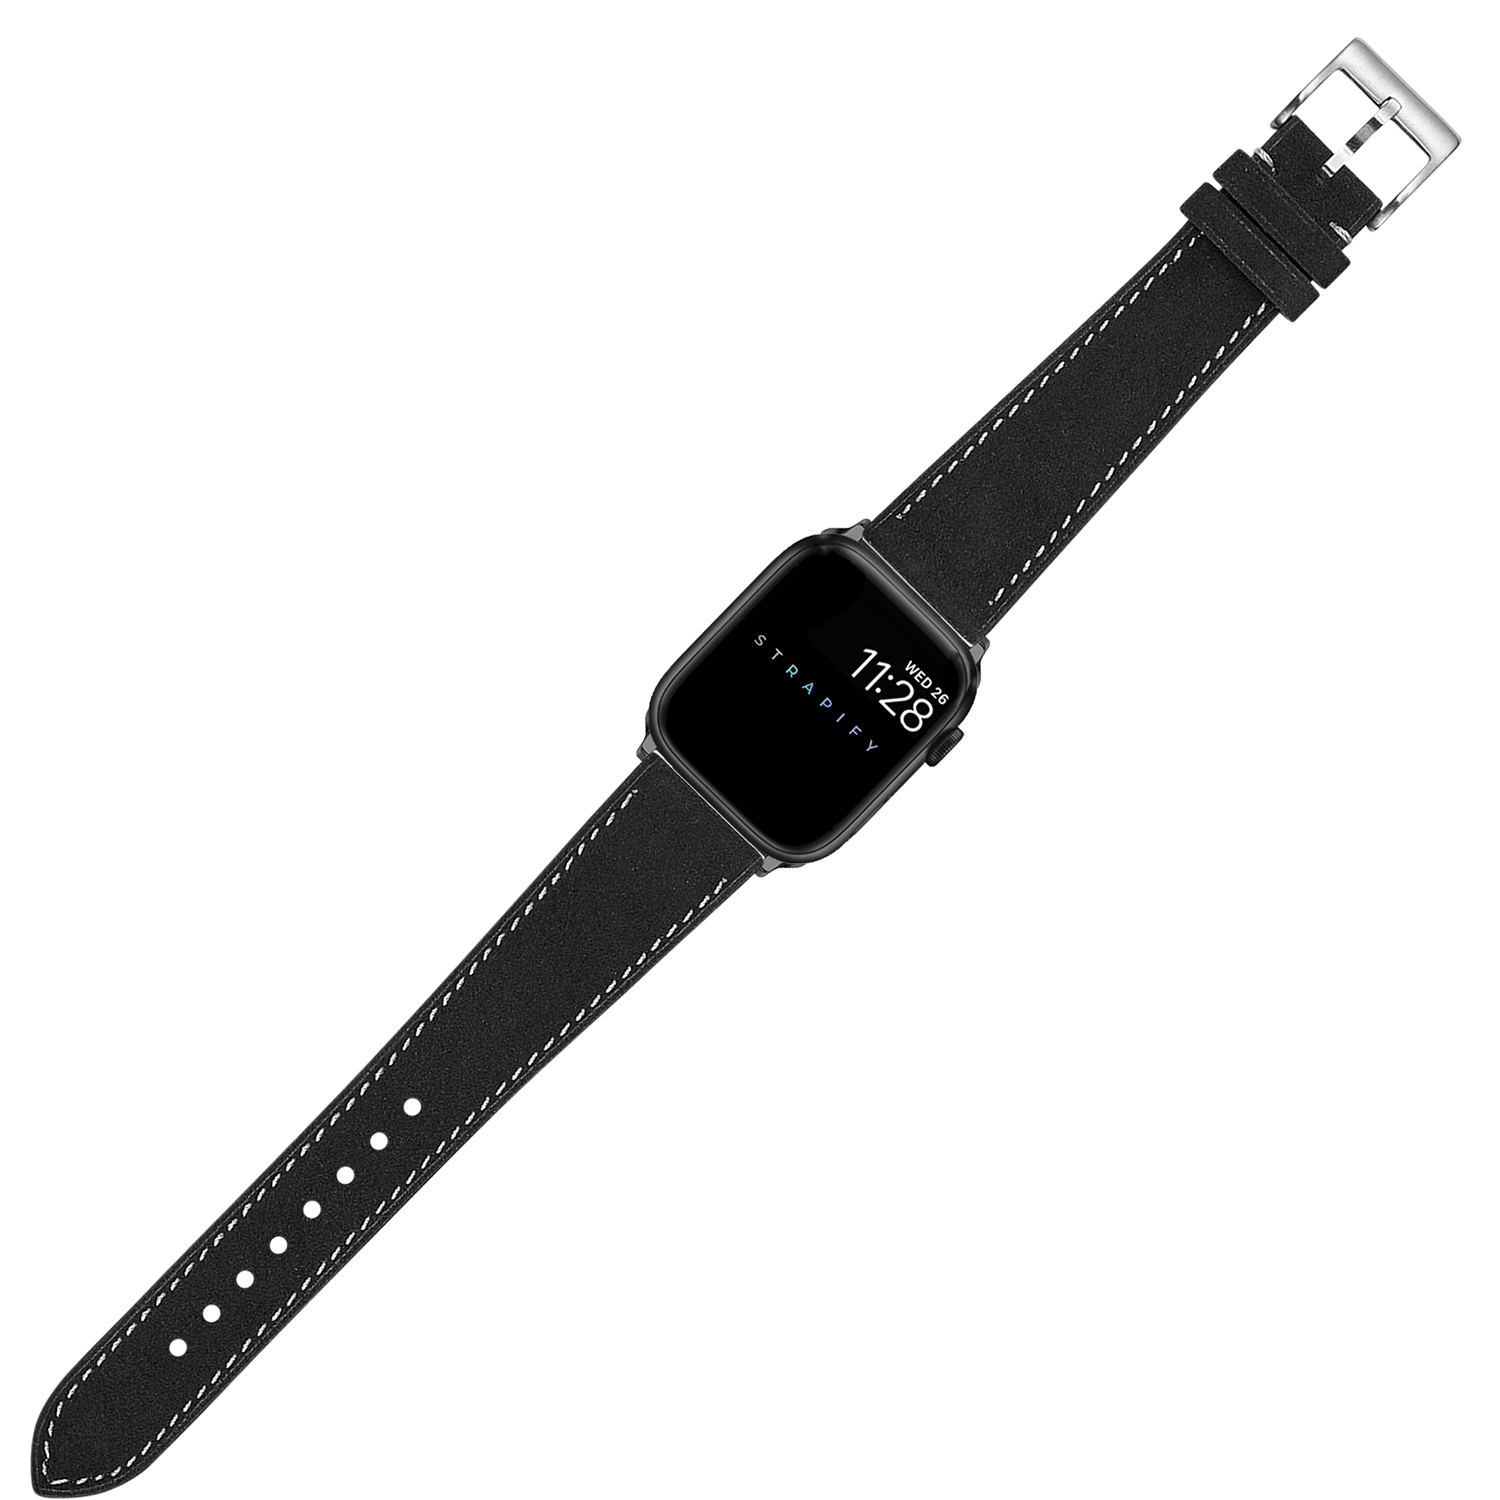 [Apple Watch] Alcantara Leather - Black | White Stitching